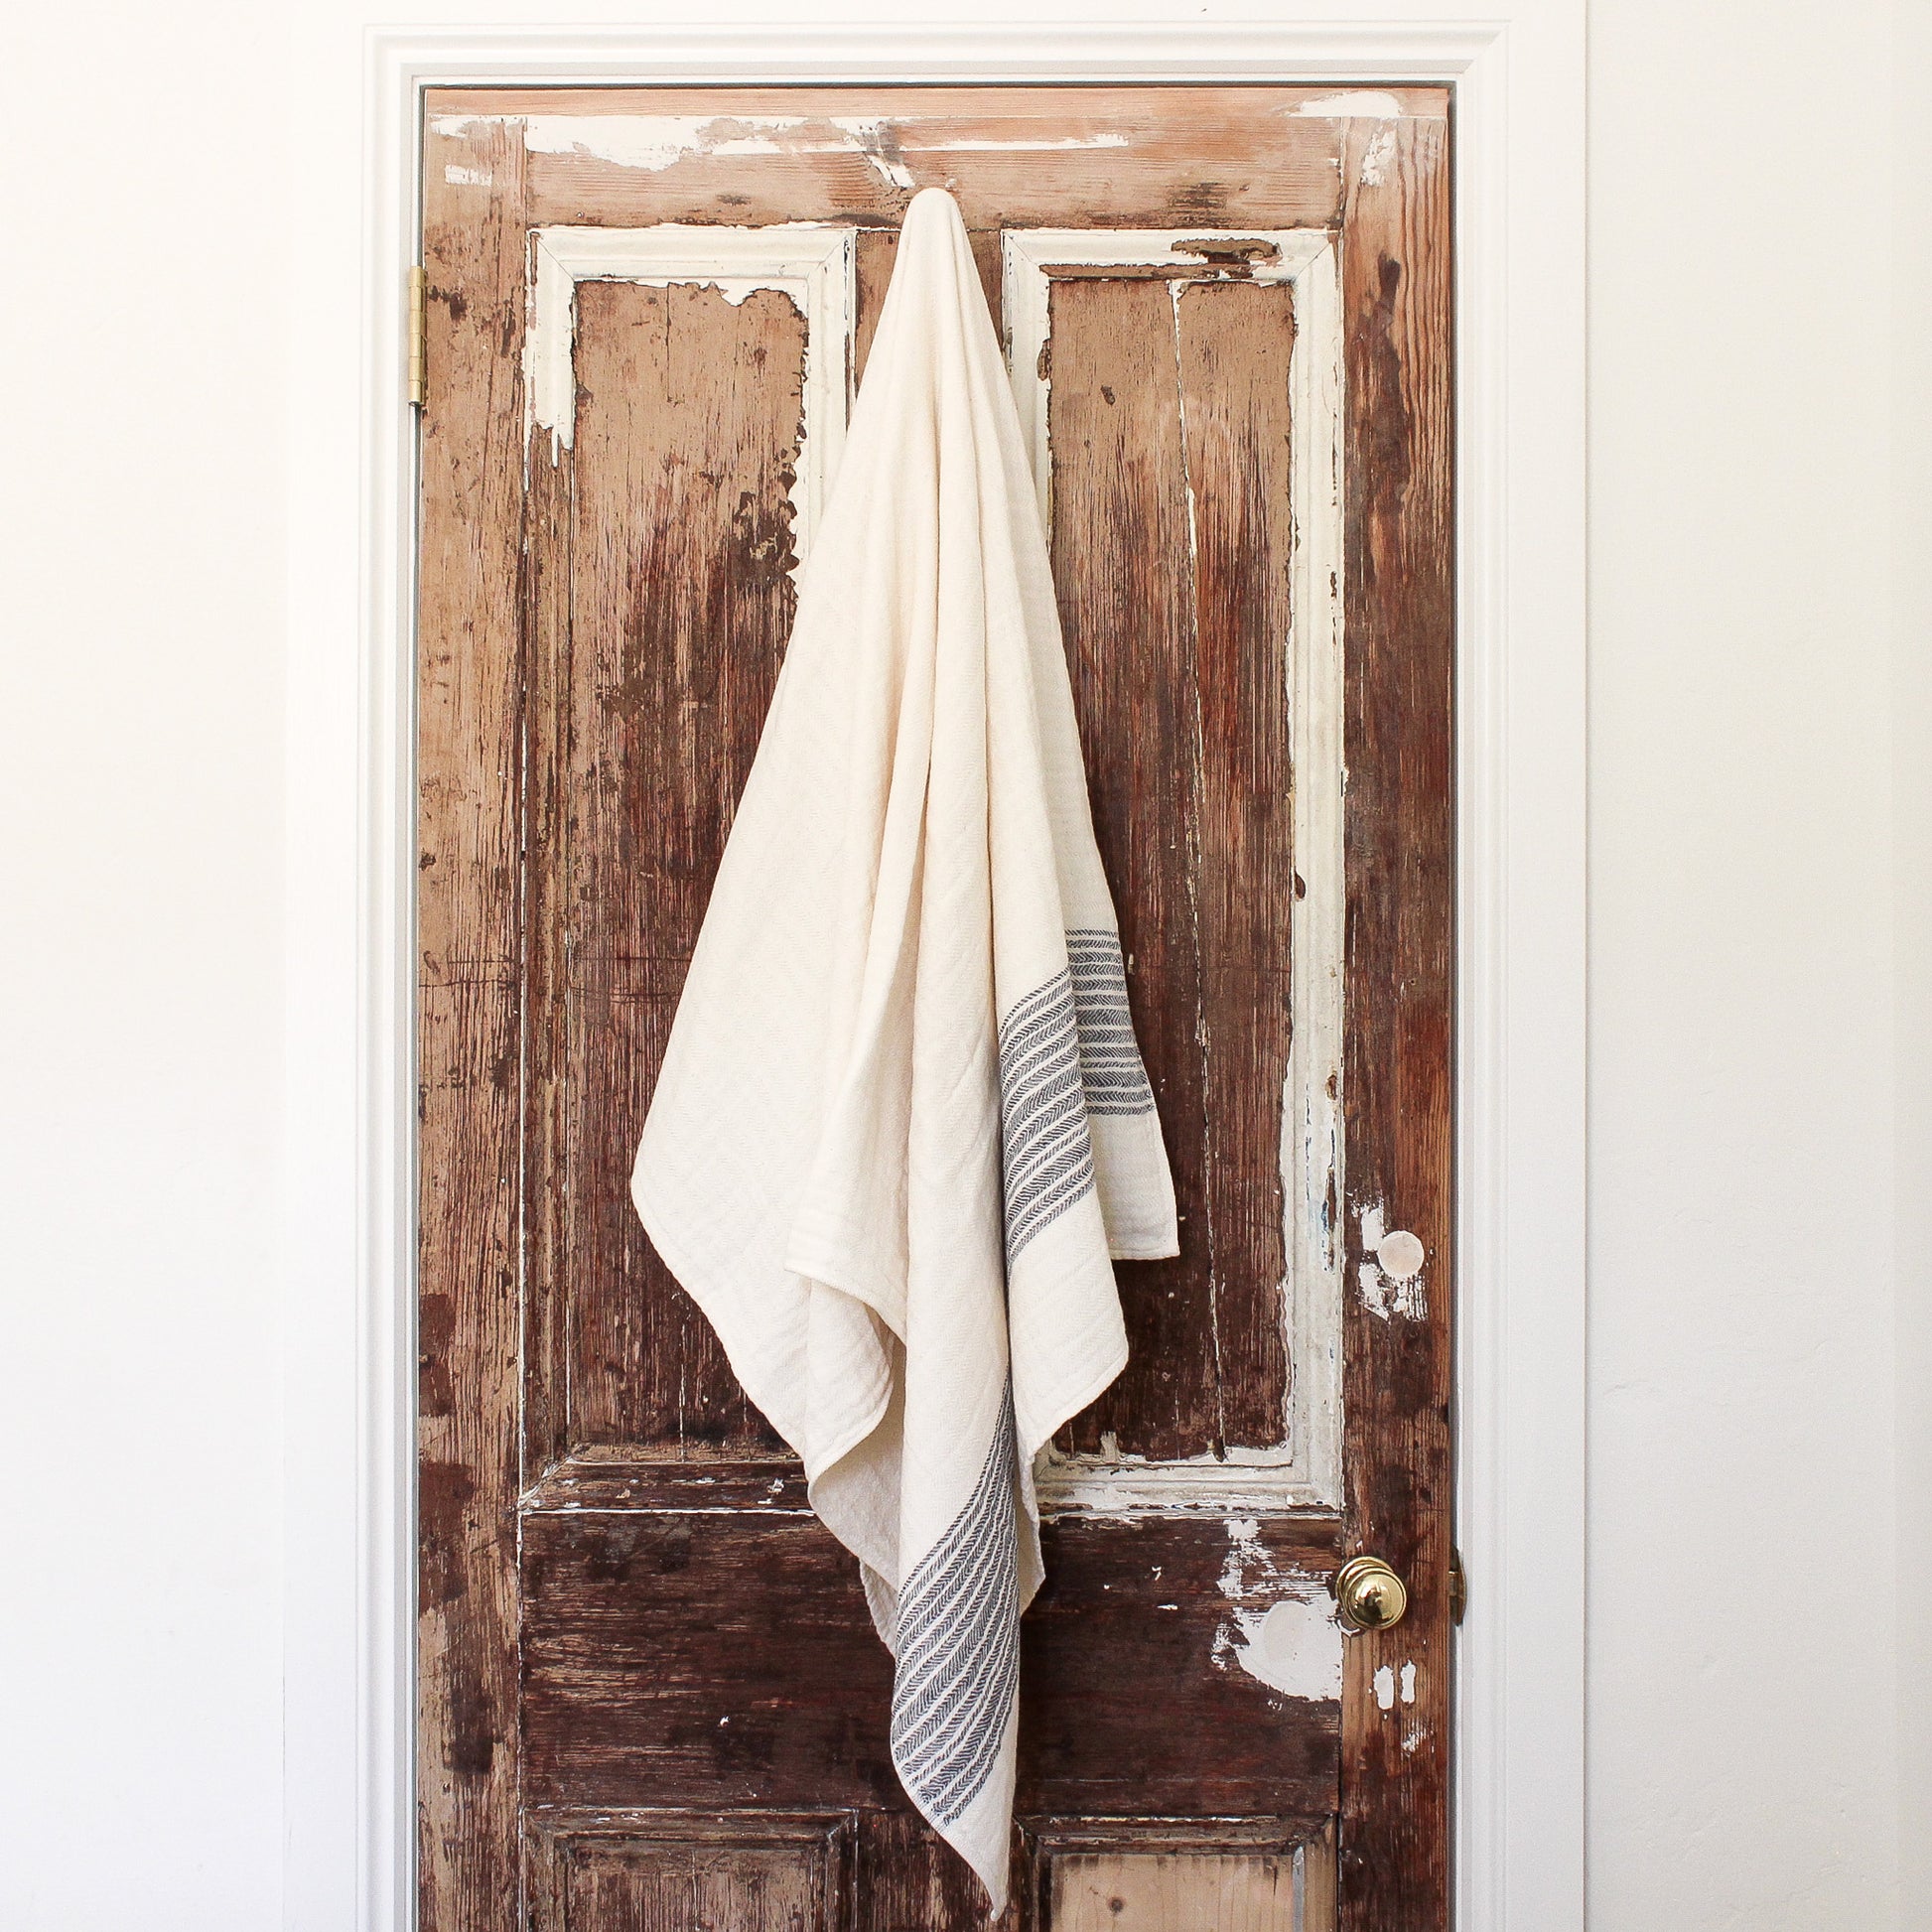 Kontex Flaxline Bath Towel Navy & Ivory | Kontex | Miss Arthur | Home Goods | Tasmania